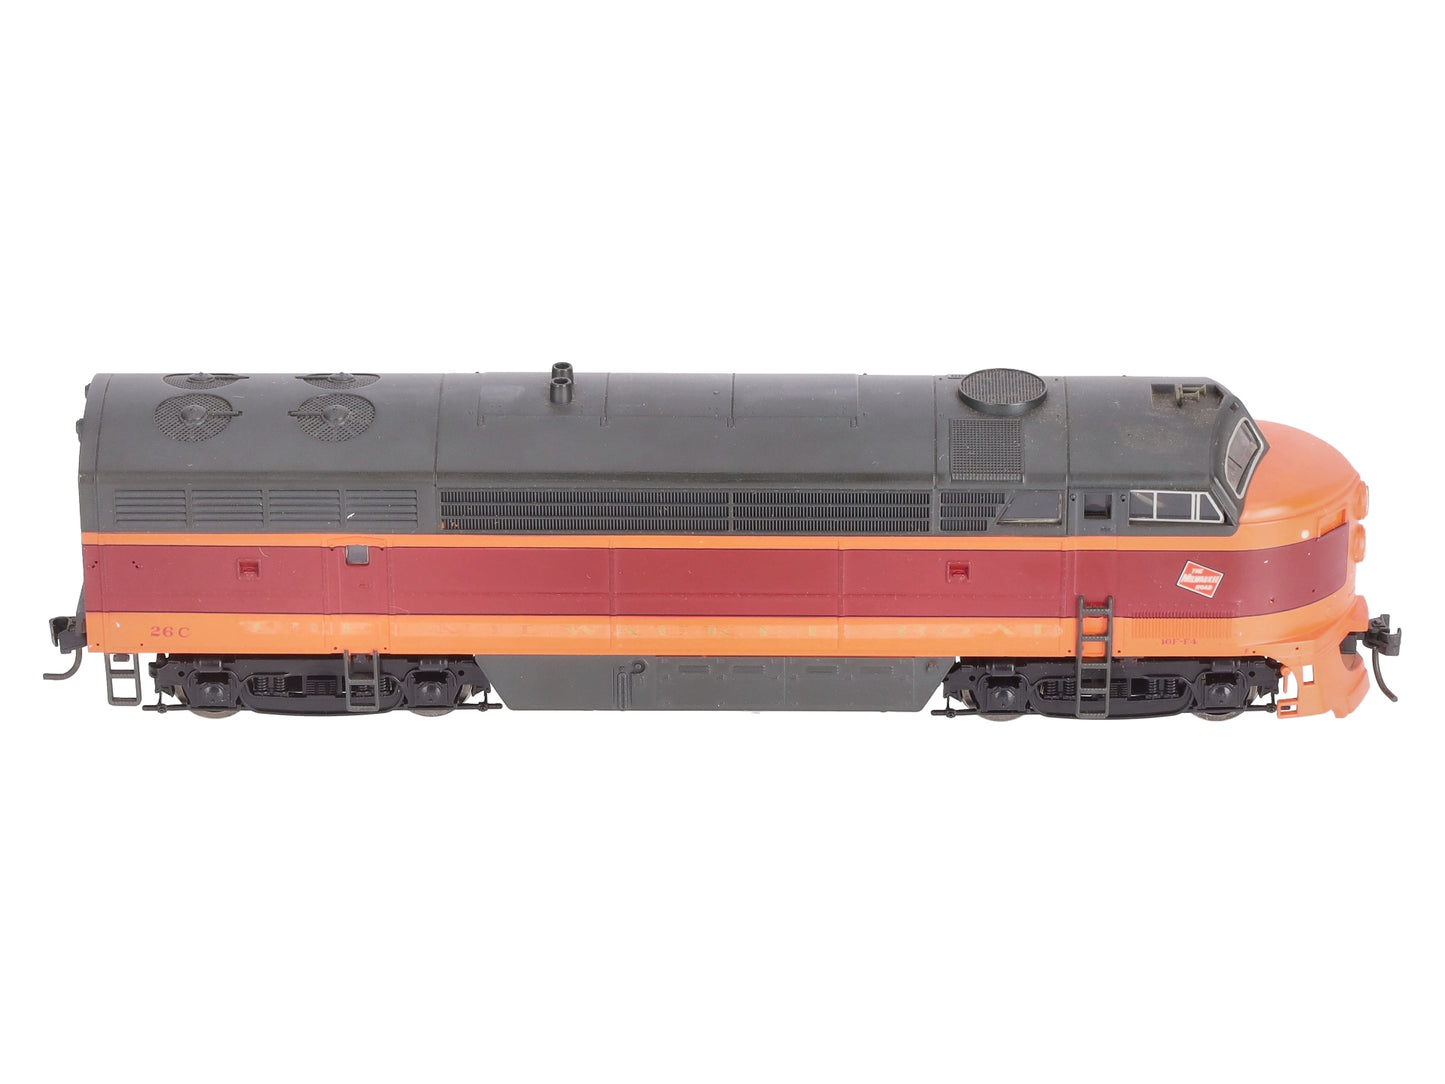 Proto 1000 23985 HO Scale Mlwaukee Road C-Liner Diesel Engine #26C EX/Box